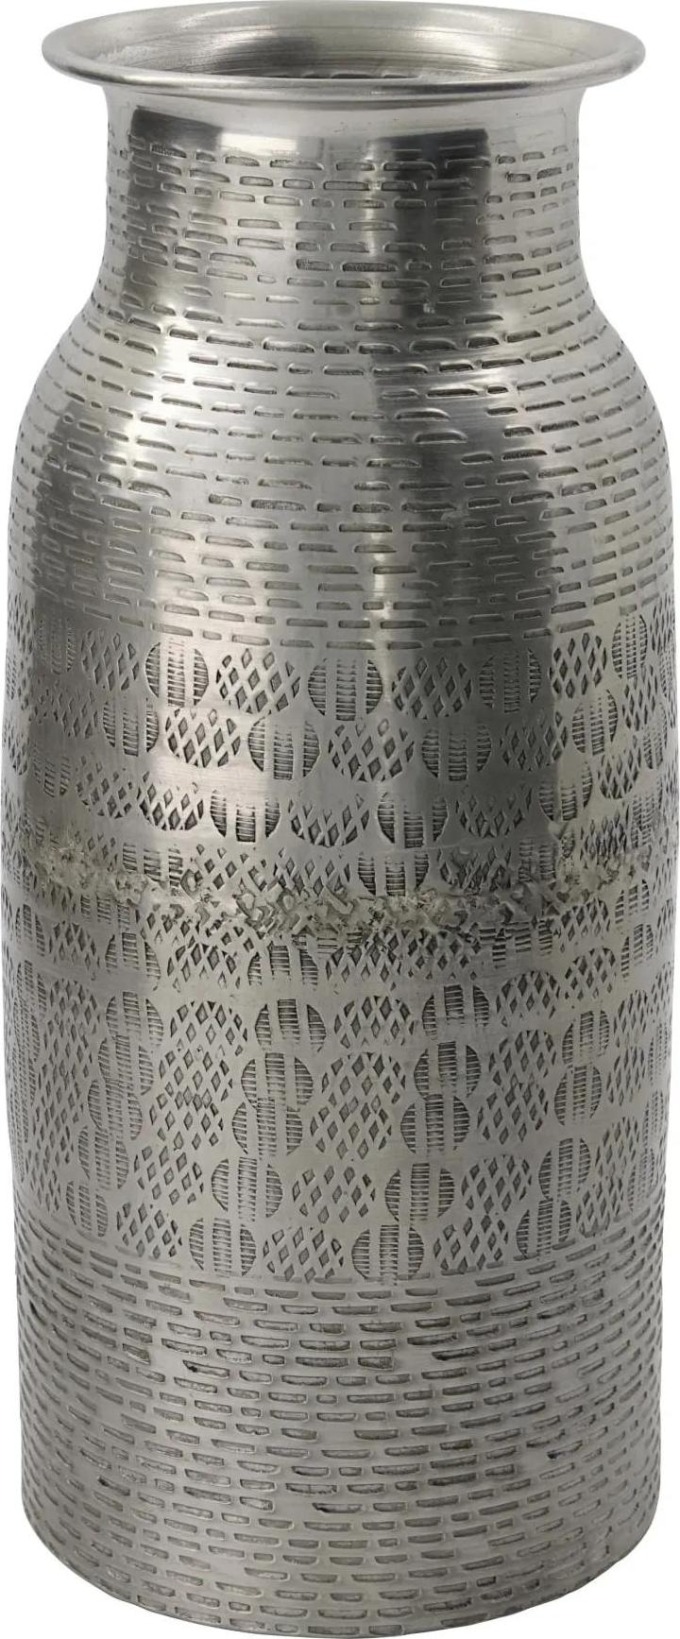 House Doctor Hliníková váza Fenja Antique Silver 26 cm, stříbrná barva, kov